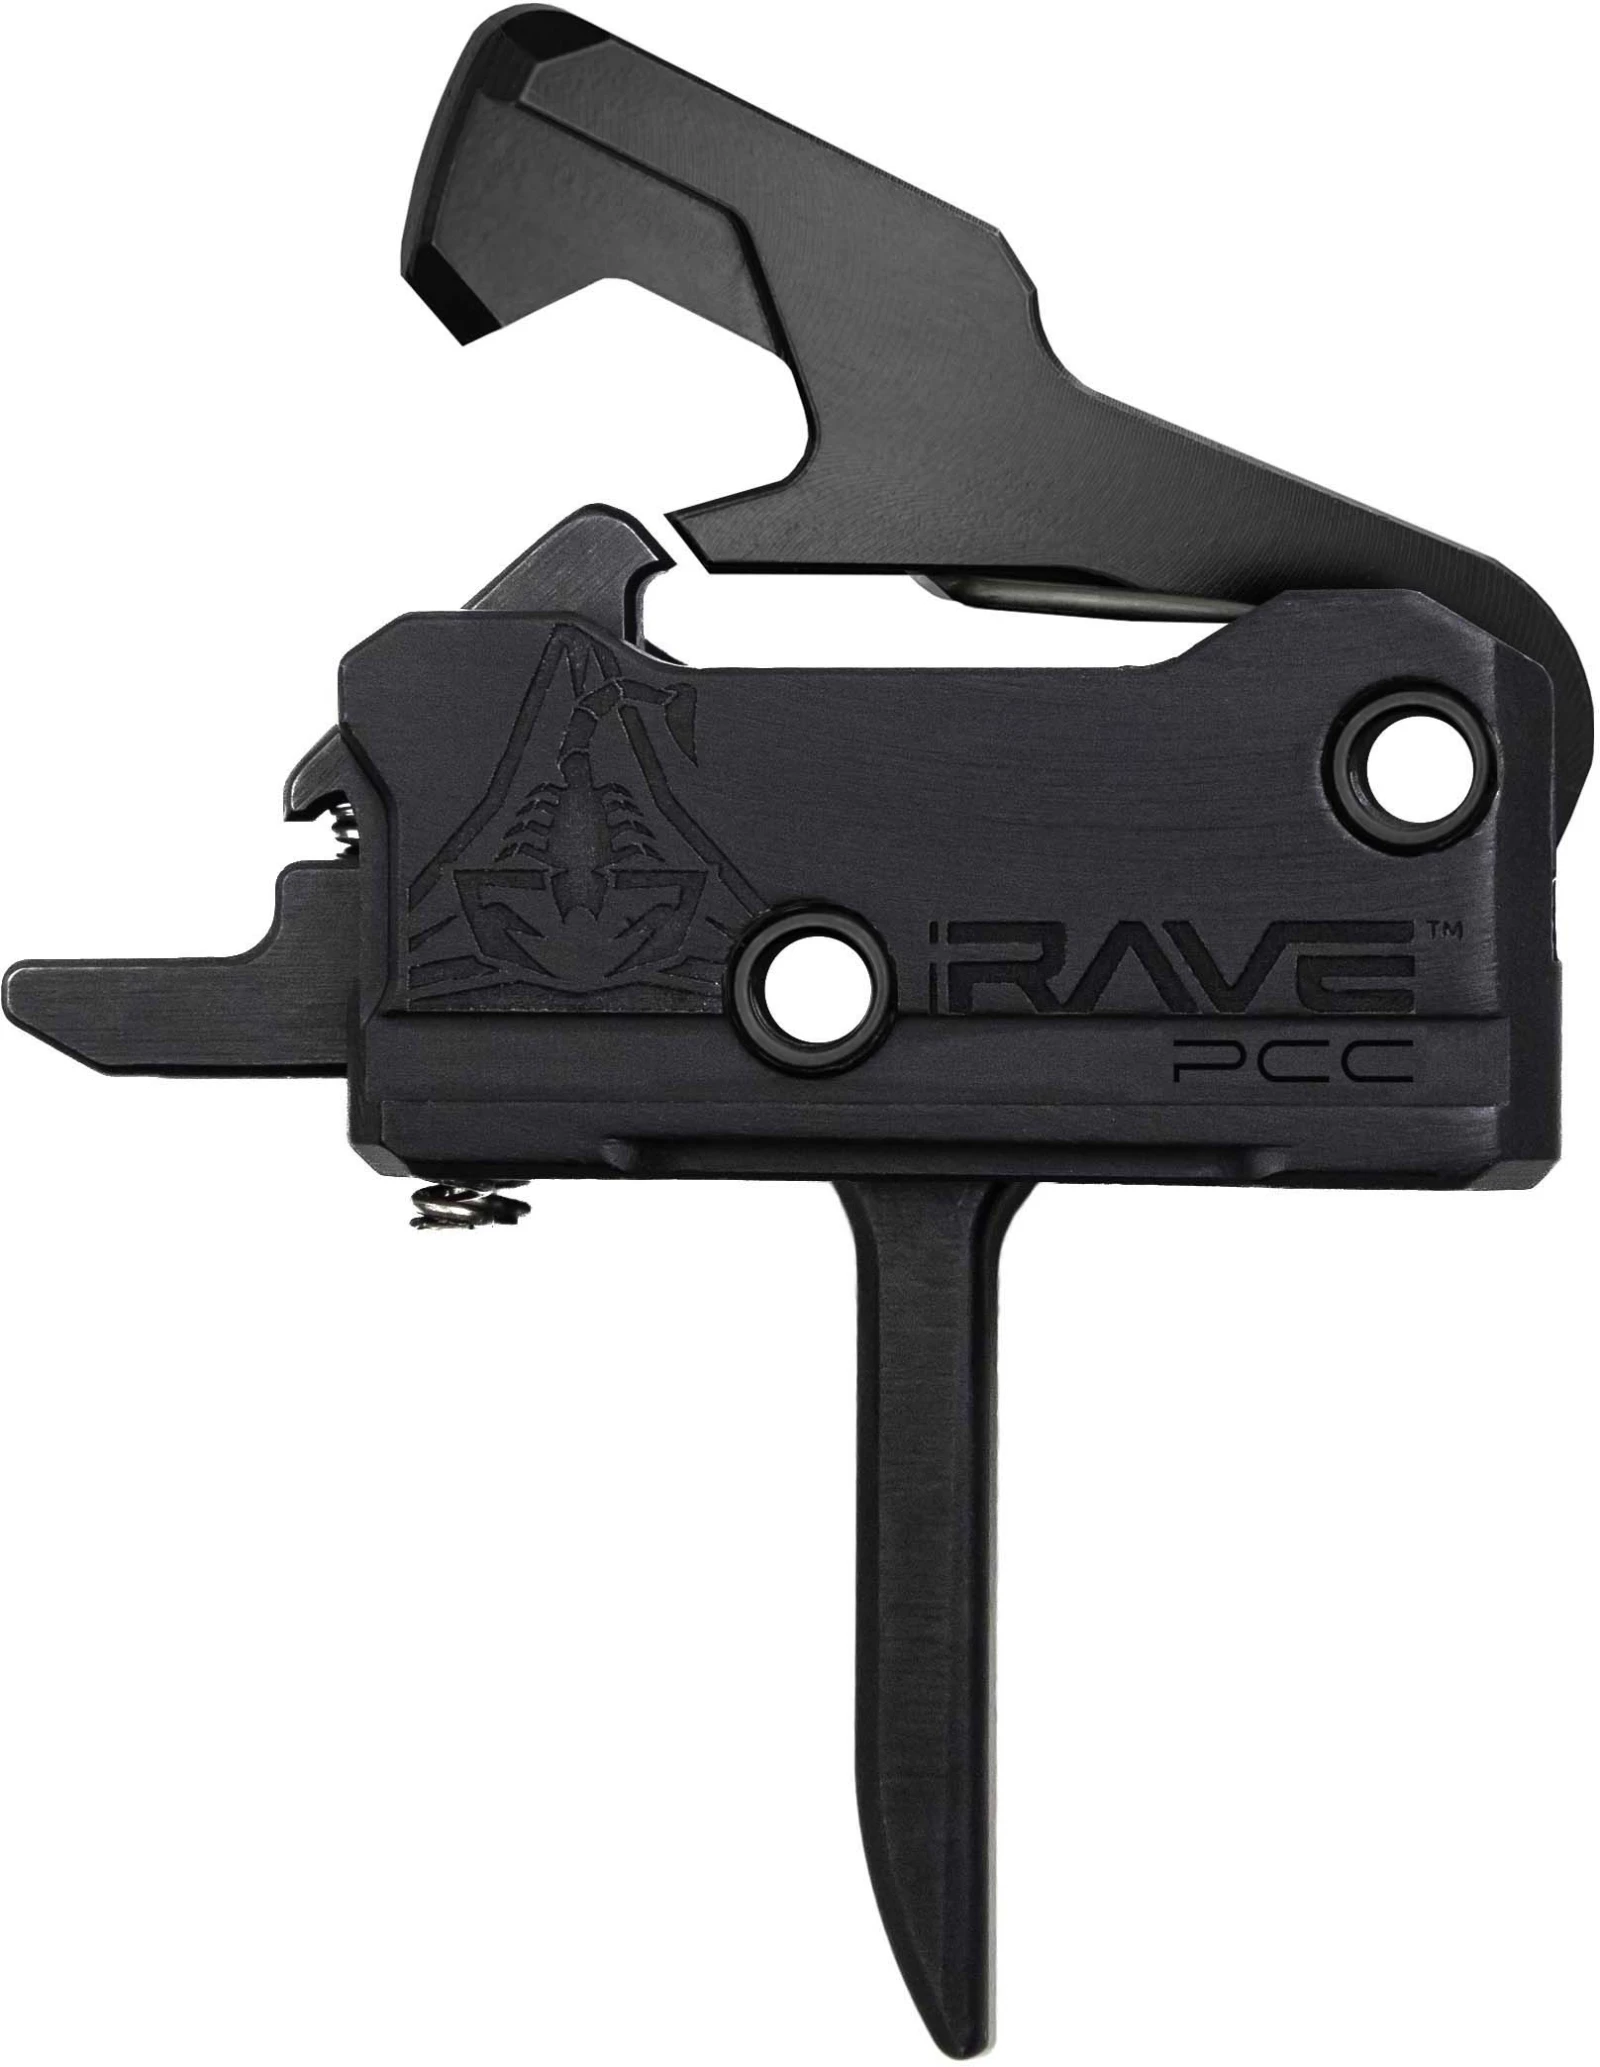 RISE Armament RAVE PCC Flat Trigger (BLK) with Anti-Walk Pins